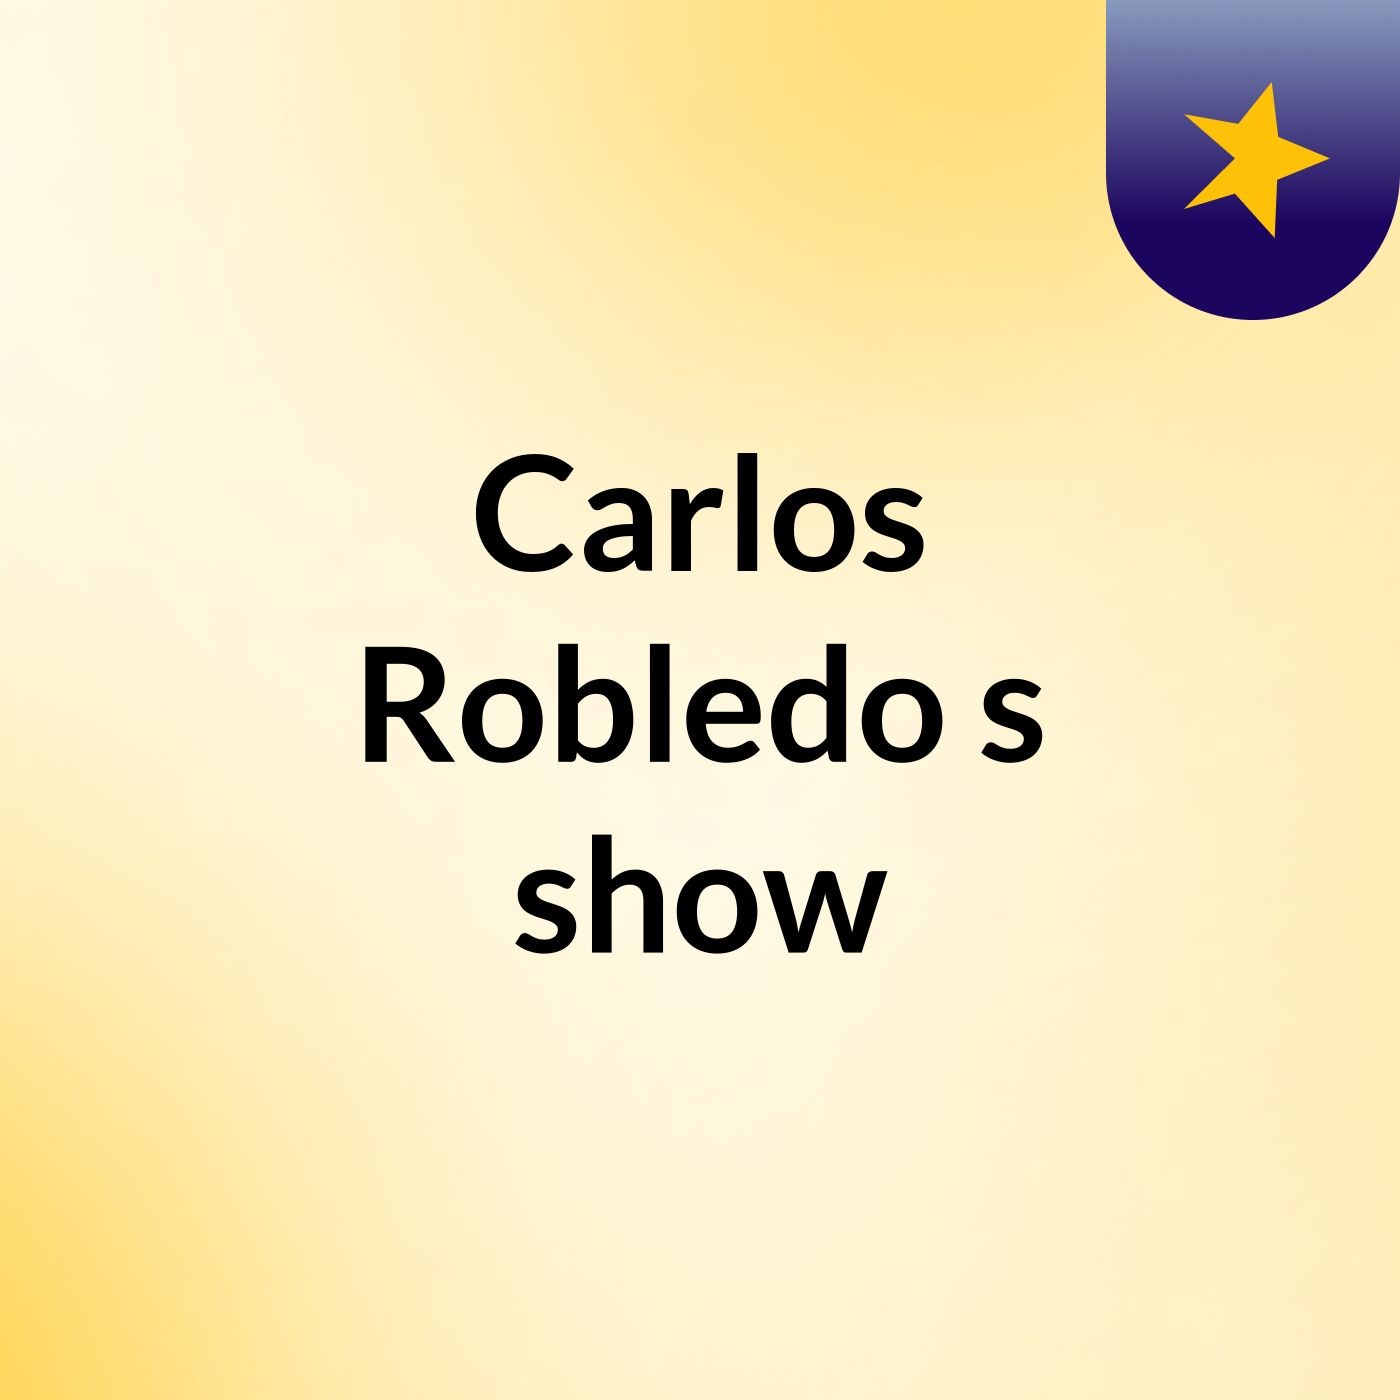 Carlos Robledo's show